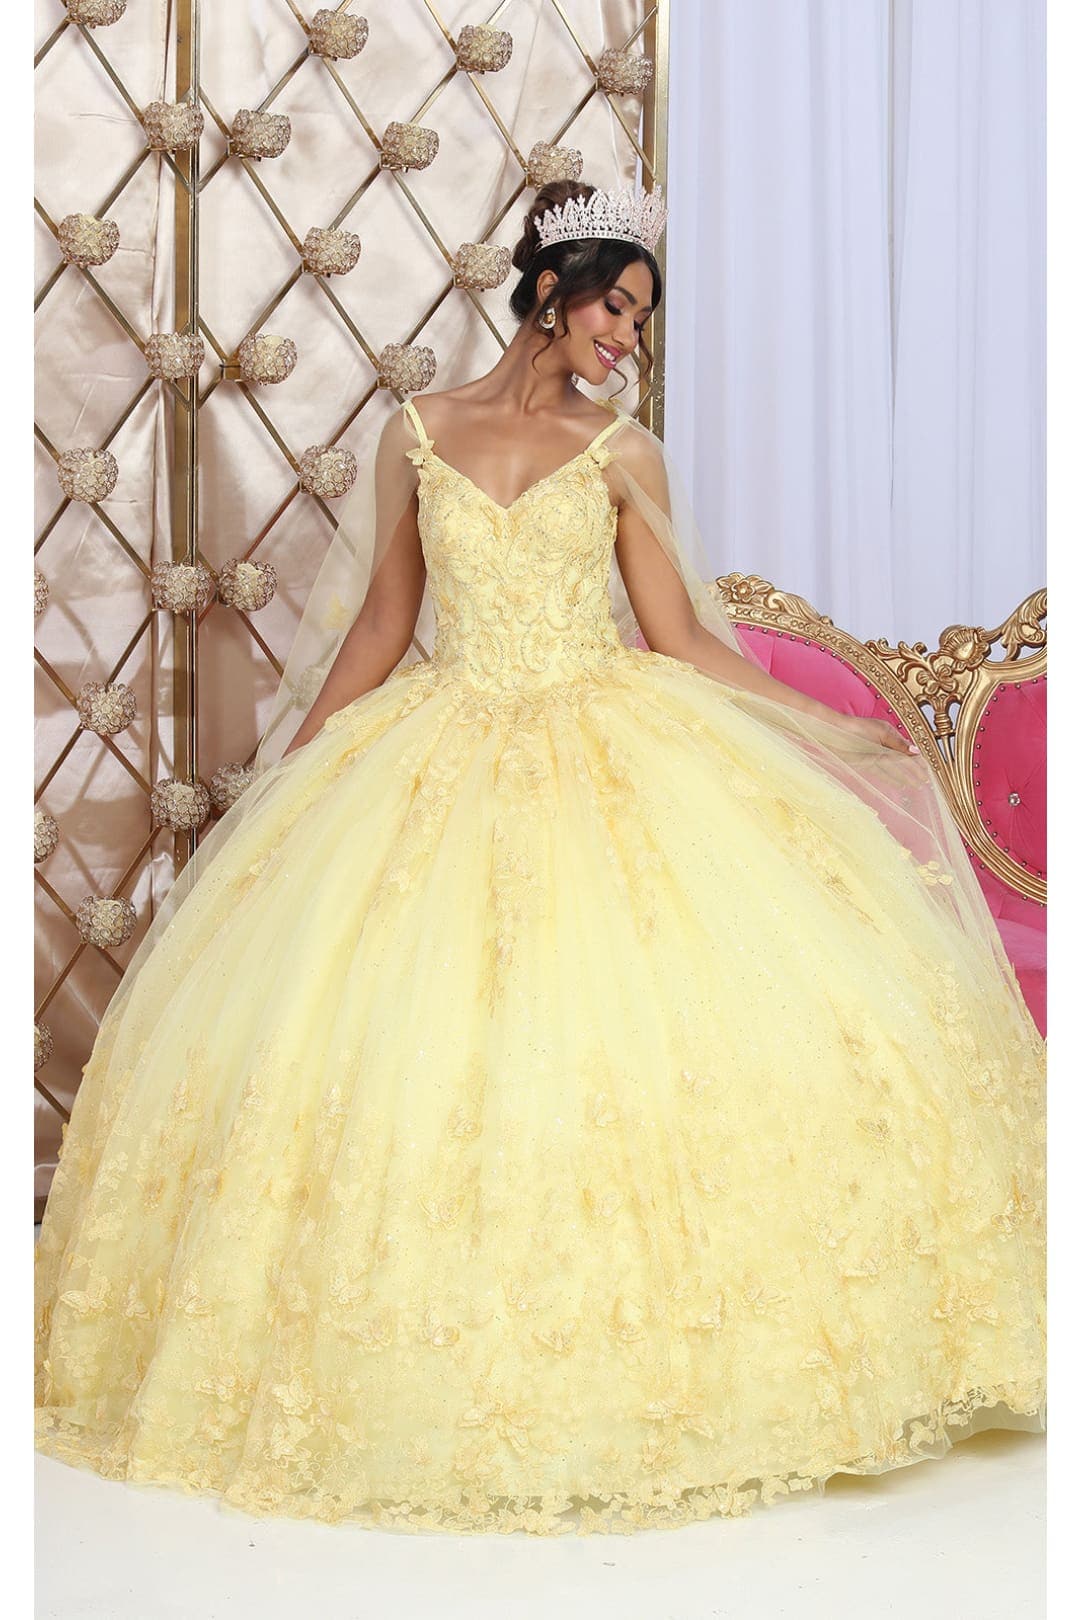 LA Merchandise LA226 Embellishment Embroidery Quince Yellow Gown - YELLOW - Dress LA Merchandise